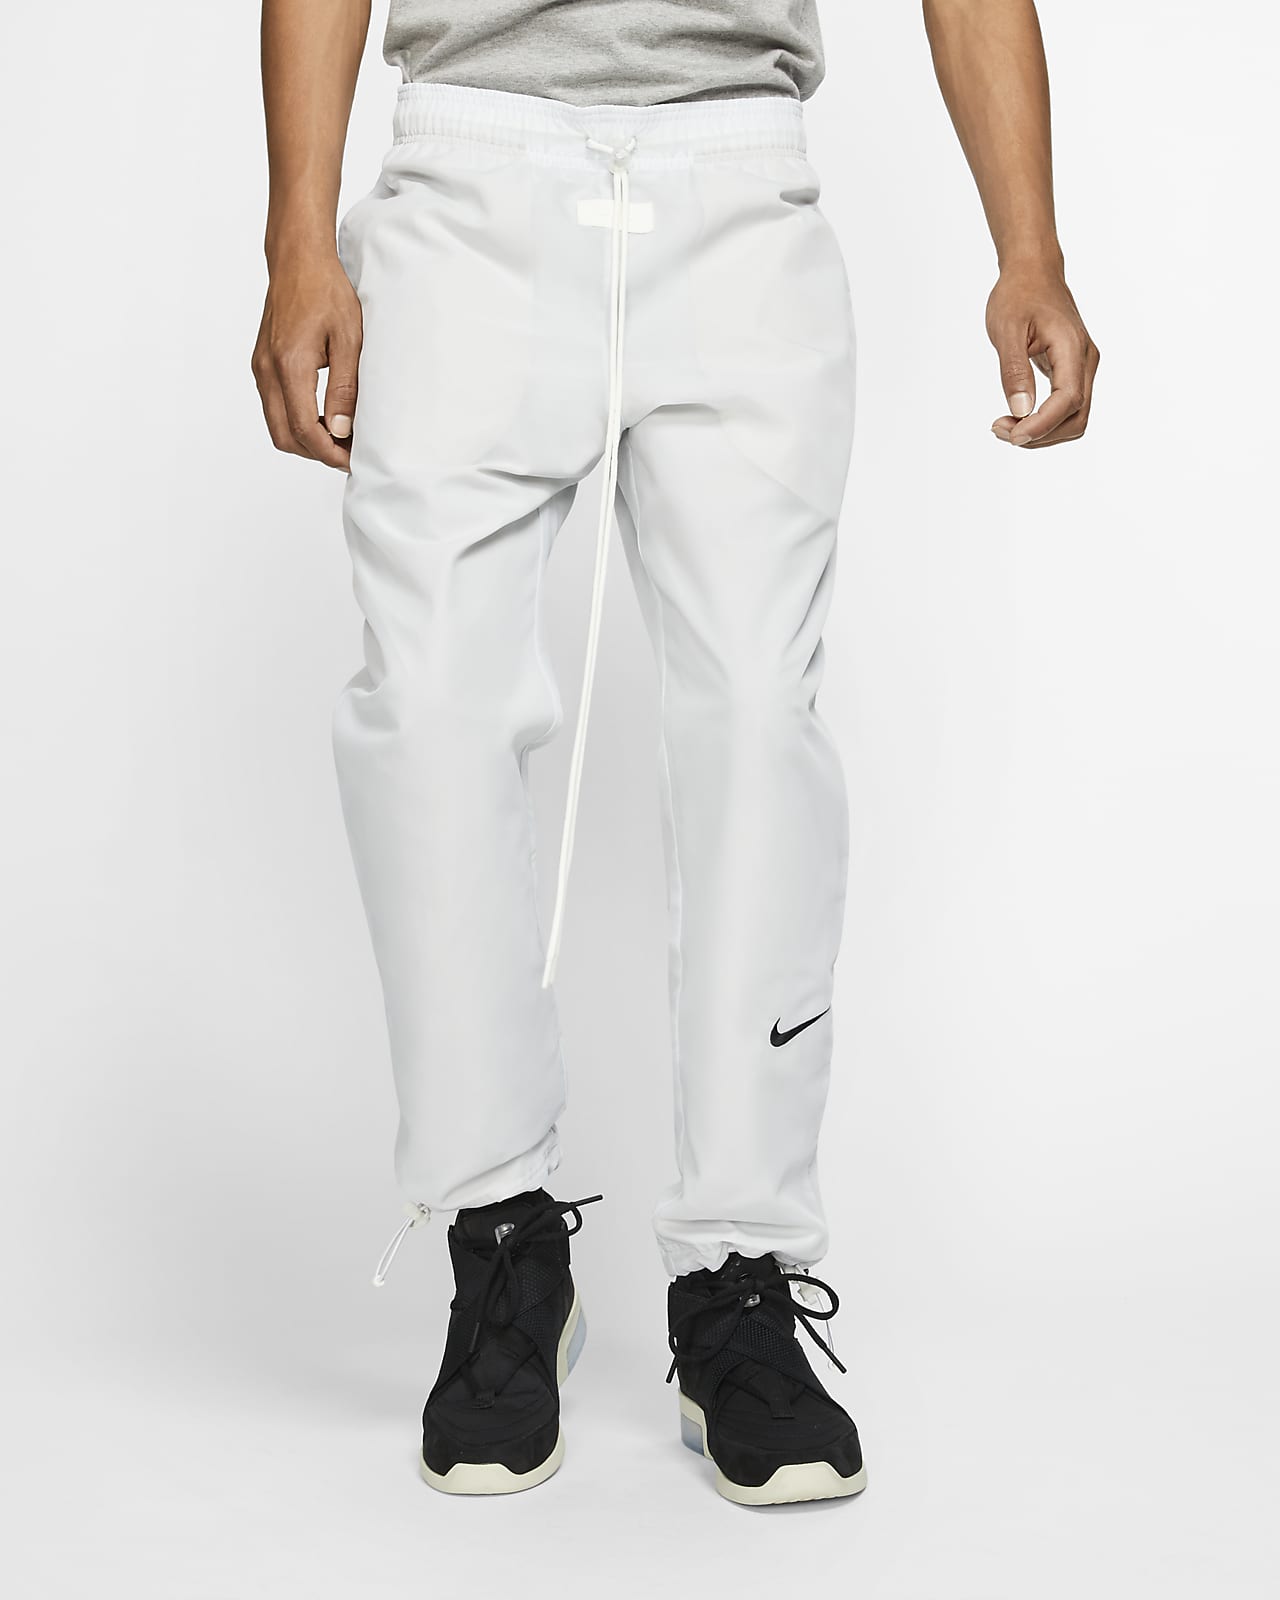 Nike x Fear of God Men's Woven Pants 